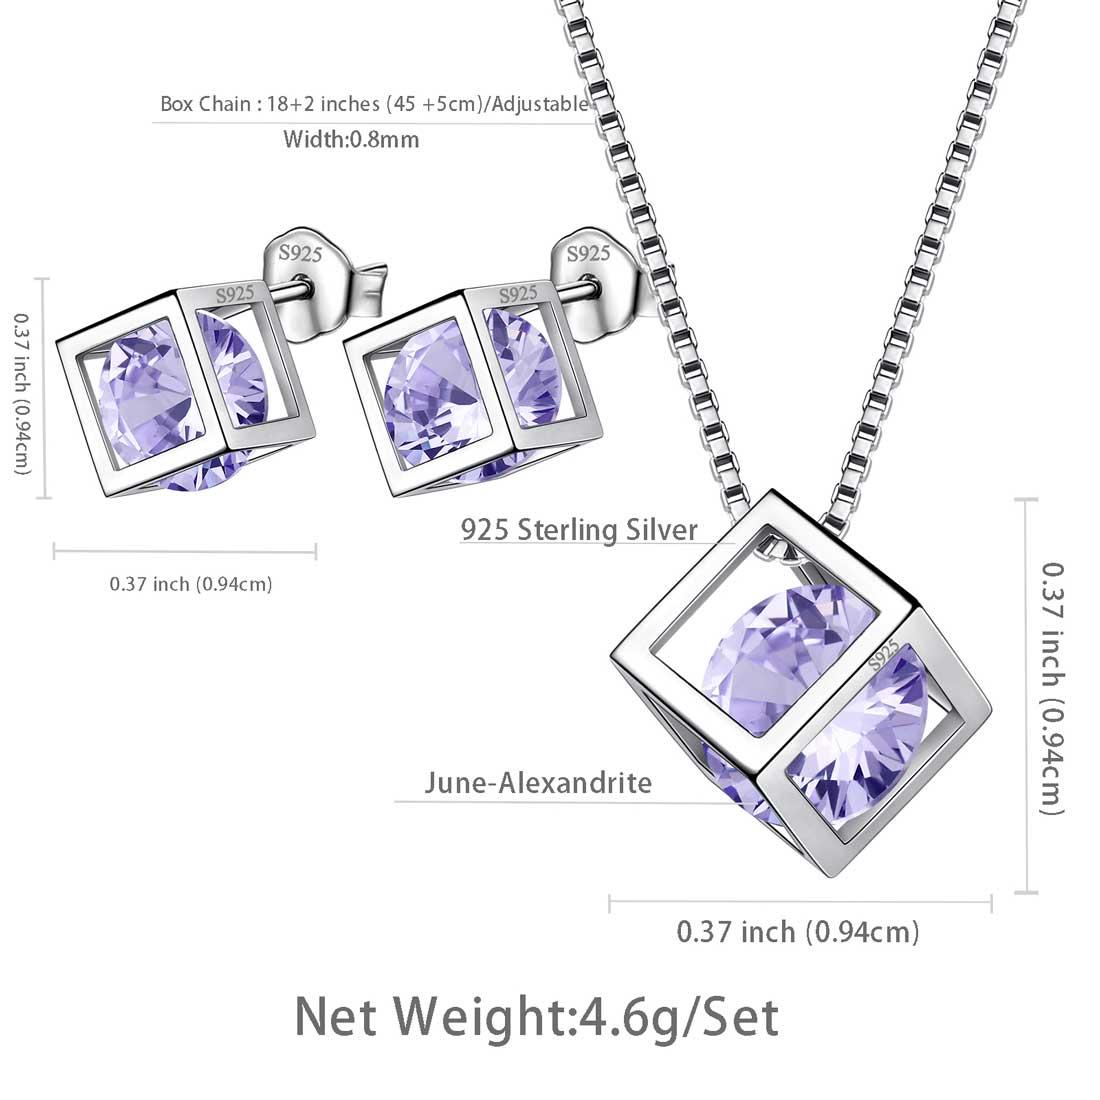 3D Cube Birthstone June Alexandrite Jewelry Set 3PCS - Jewelry Set - Aurora Tears